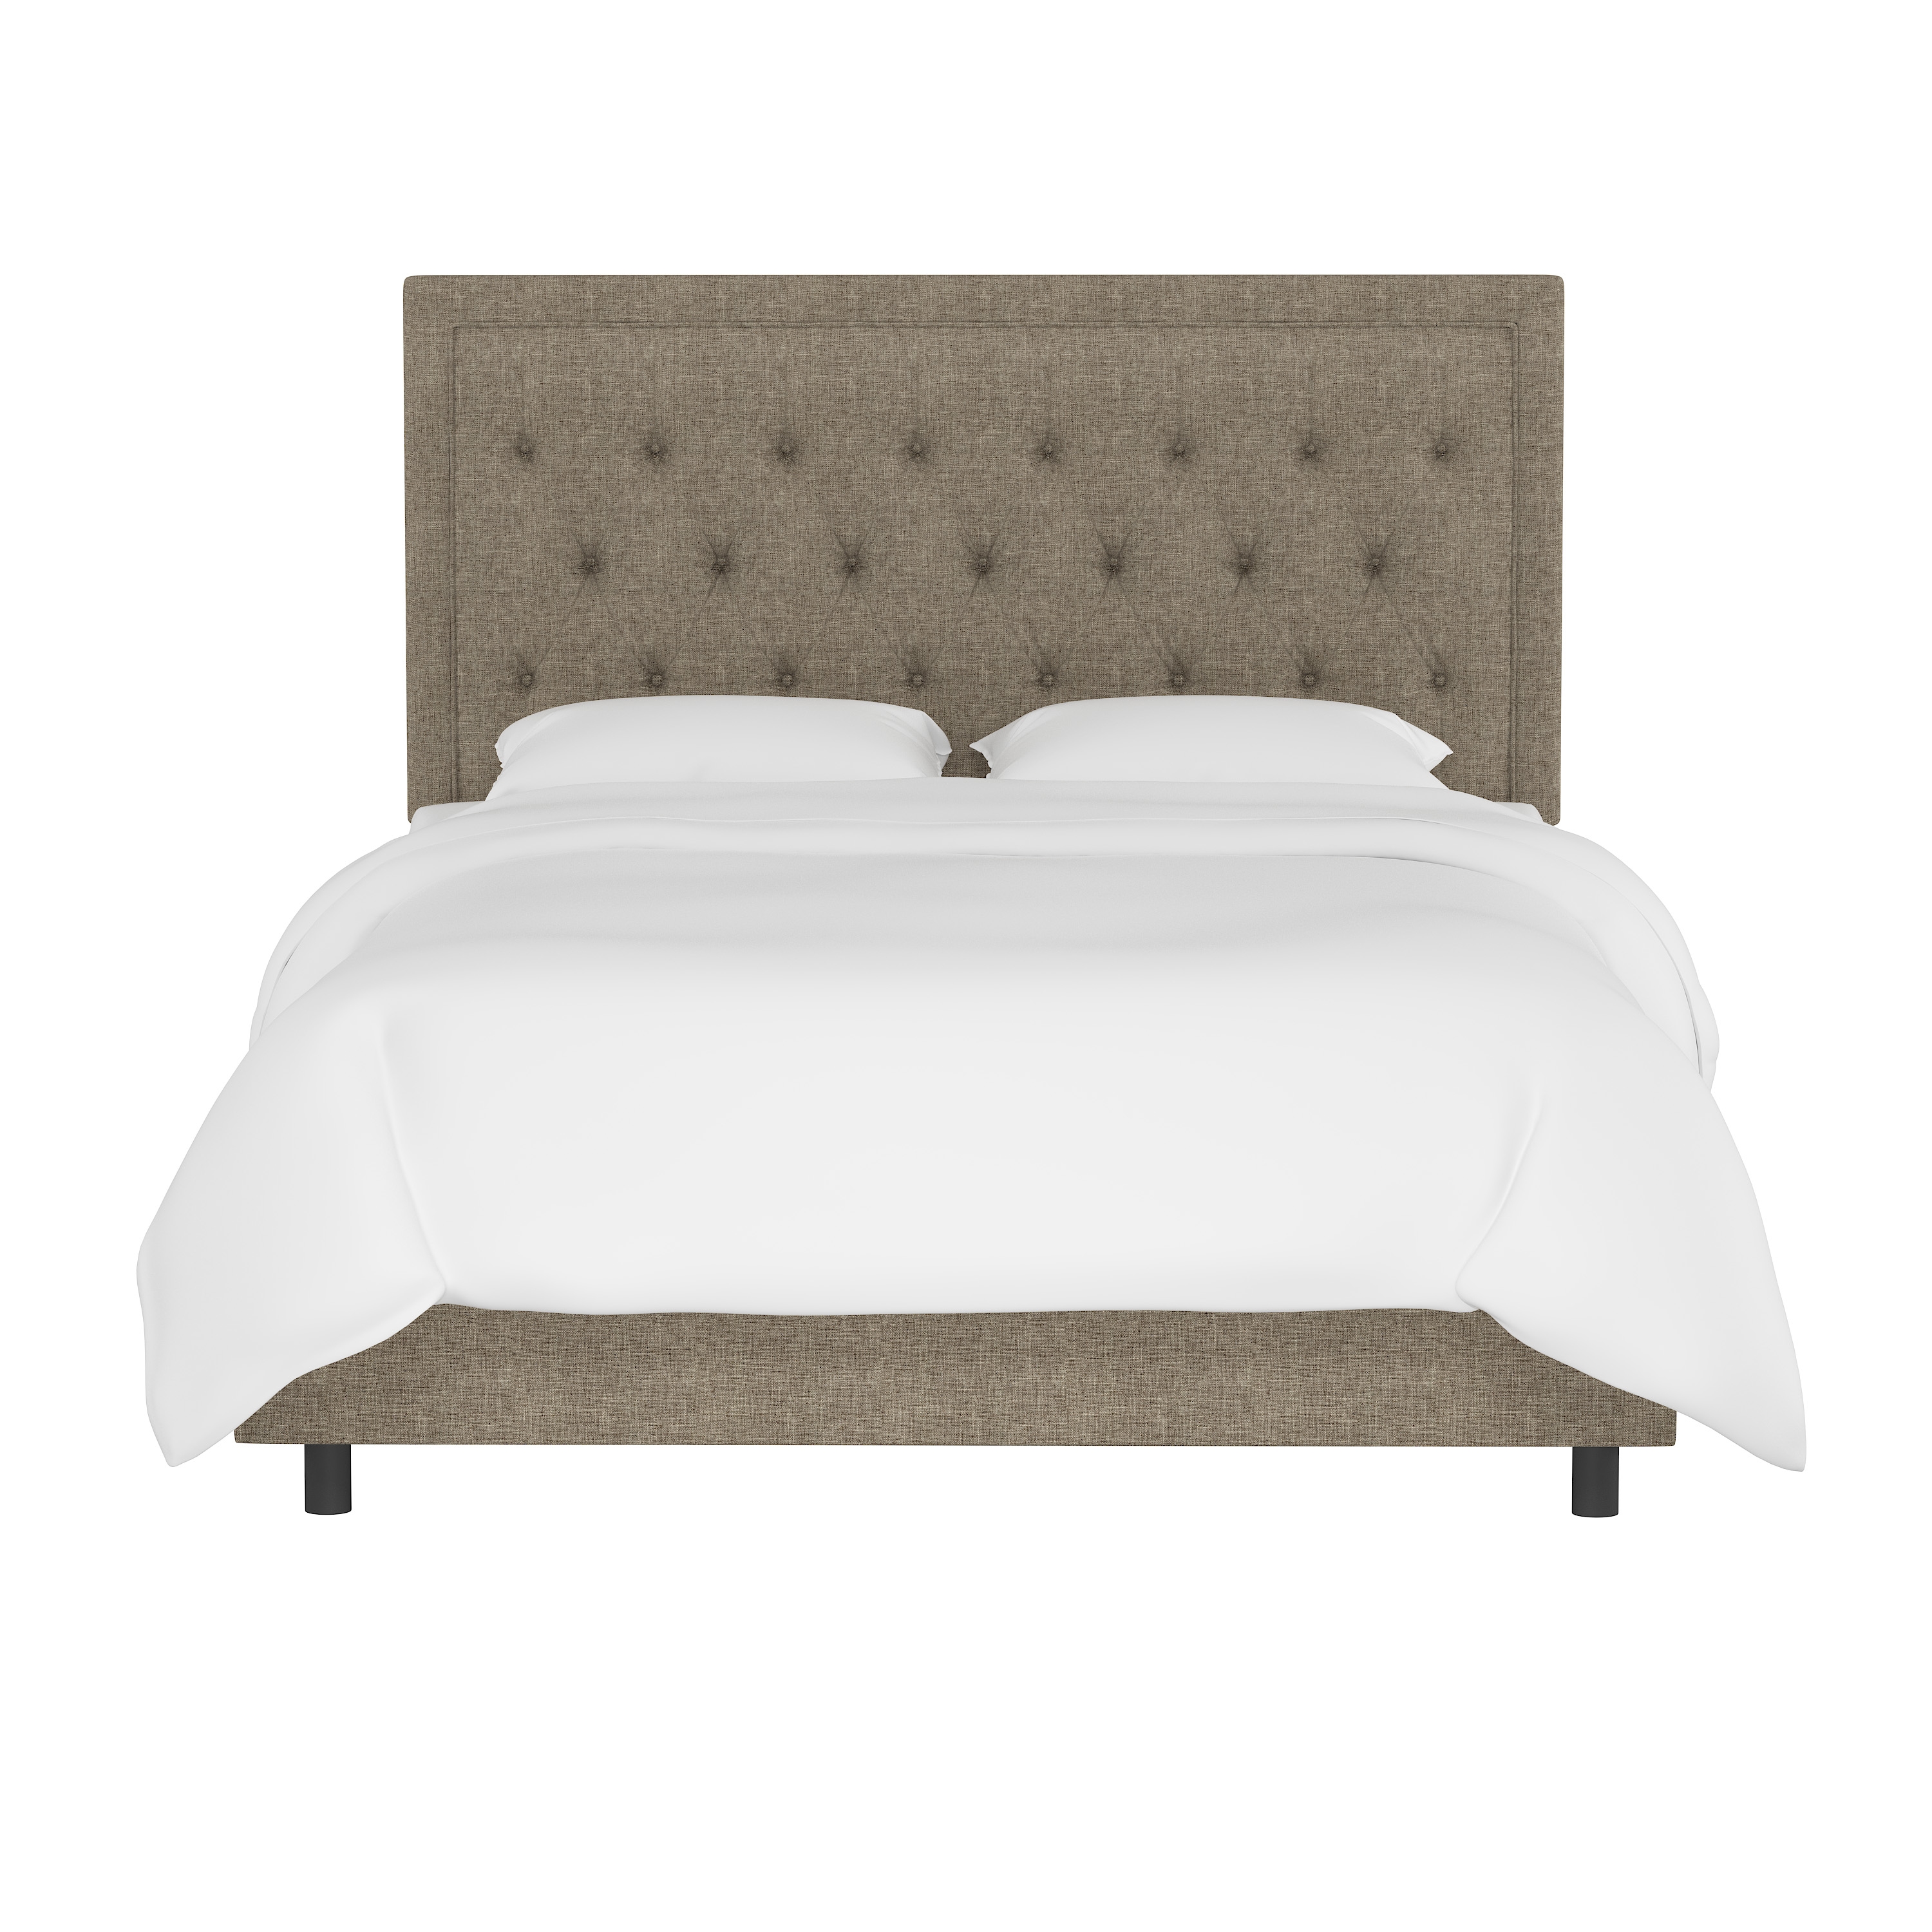 Lafayette Bed, King, Linen - Image 0